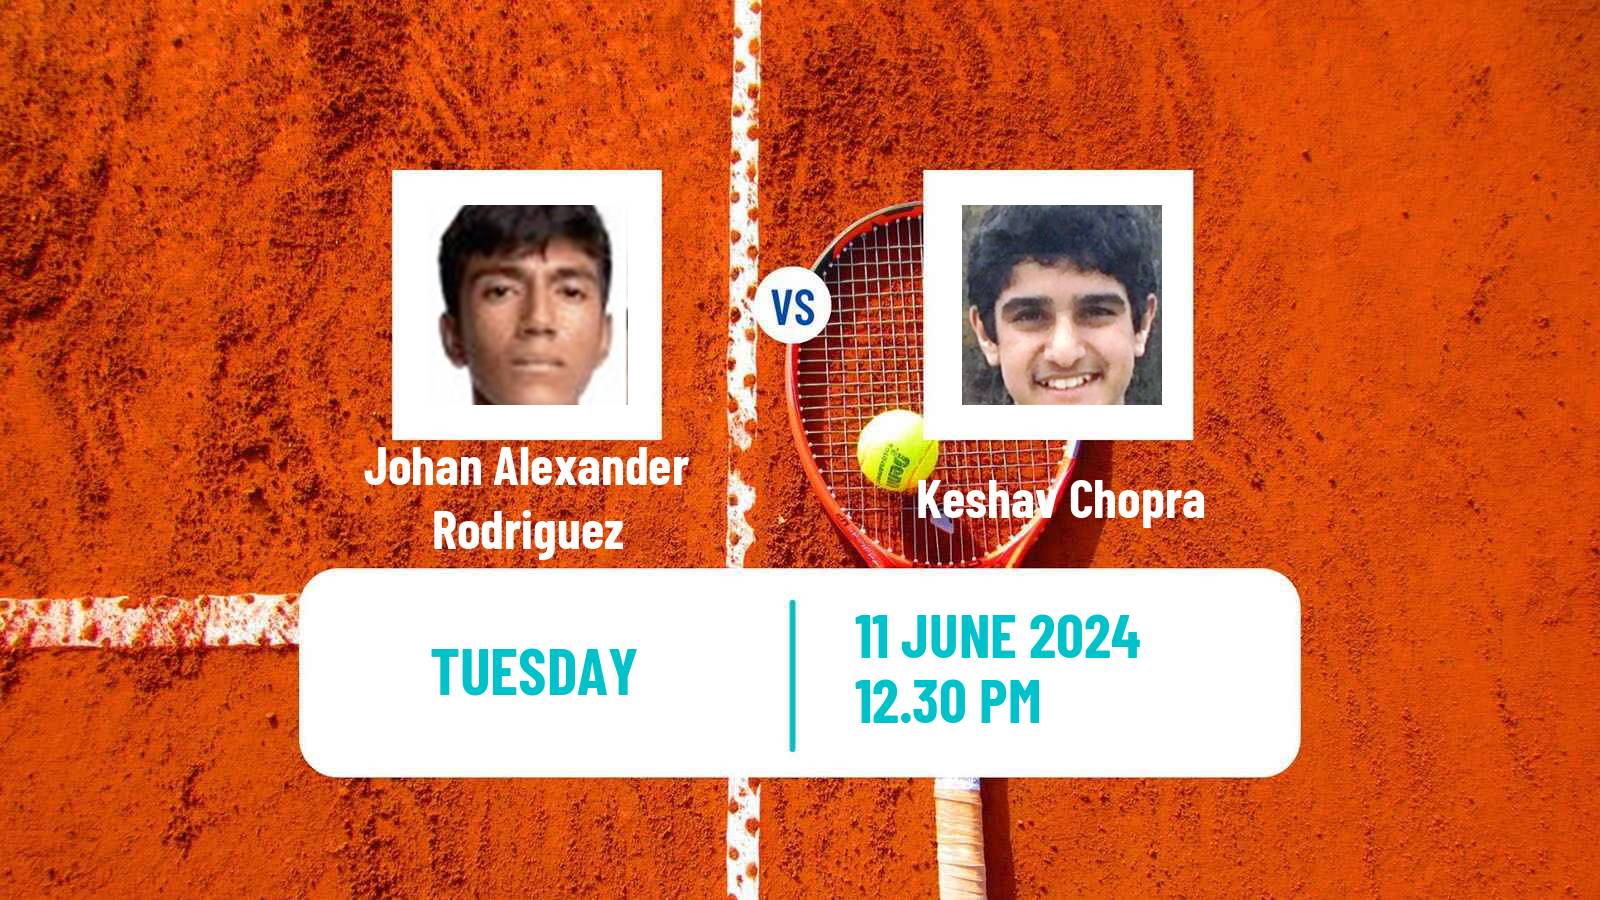 Tennis ITF M15 Santo Domingo 2 Men Johan Alexander Rodriguez - Keshav Chopra